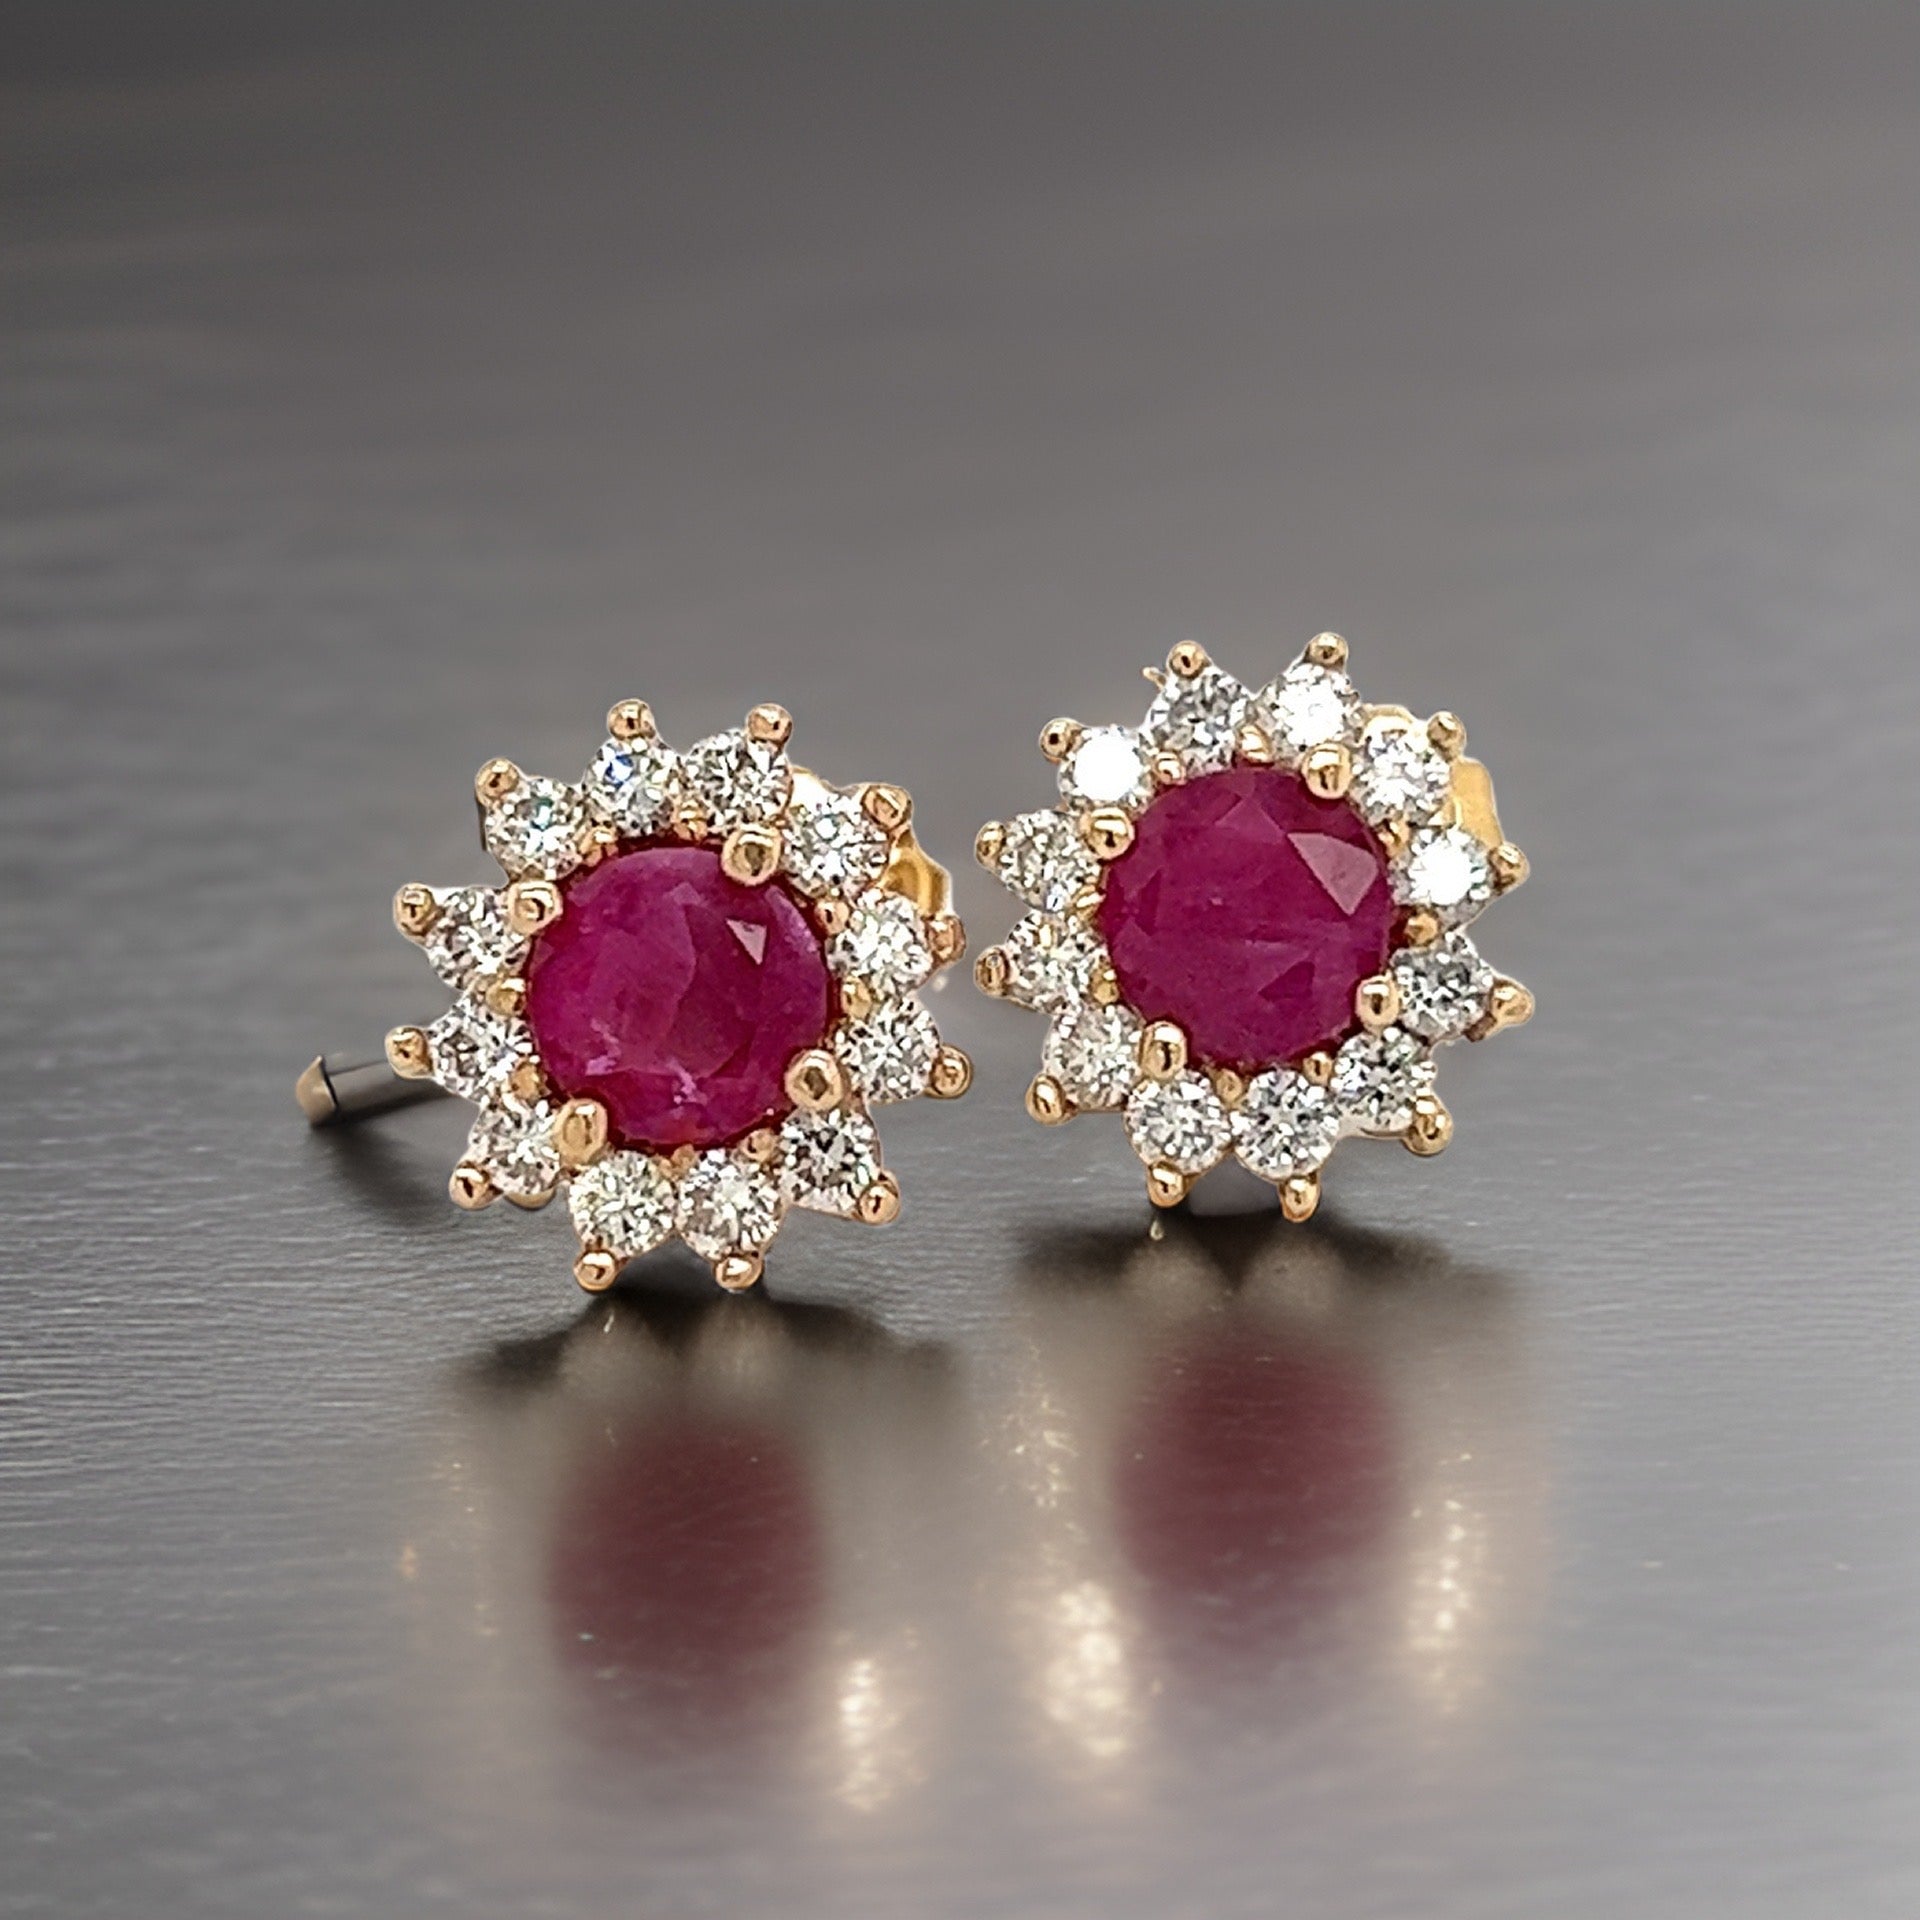 Natural Ruby Diamond Earrings 14k Yellow Gold 2.20 TCW Certified $2,595 121103 - Certified Fine Jewelry